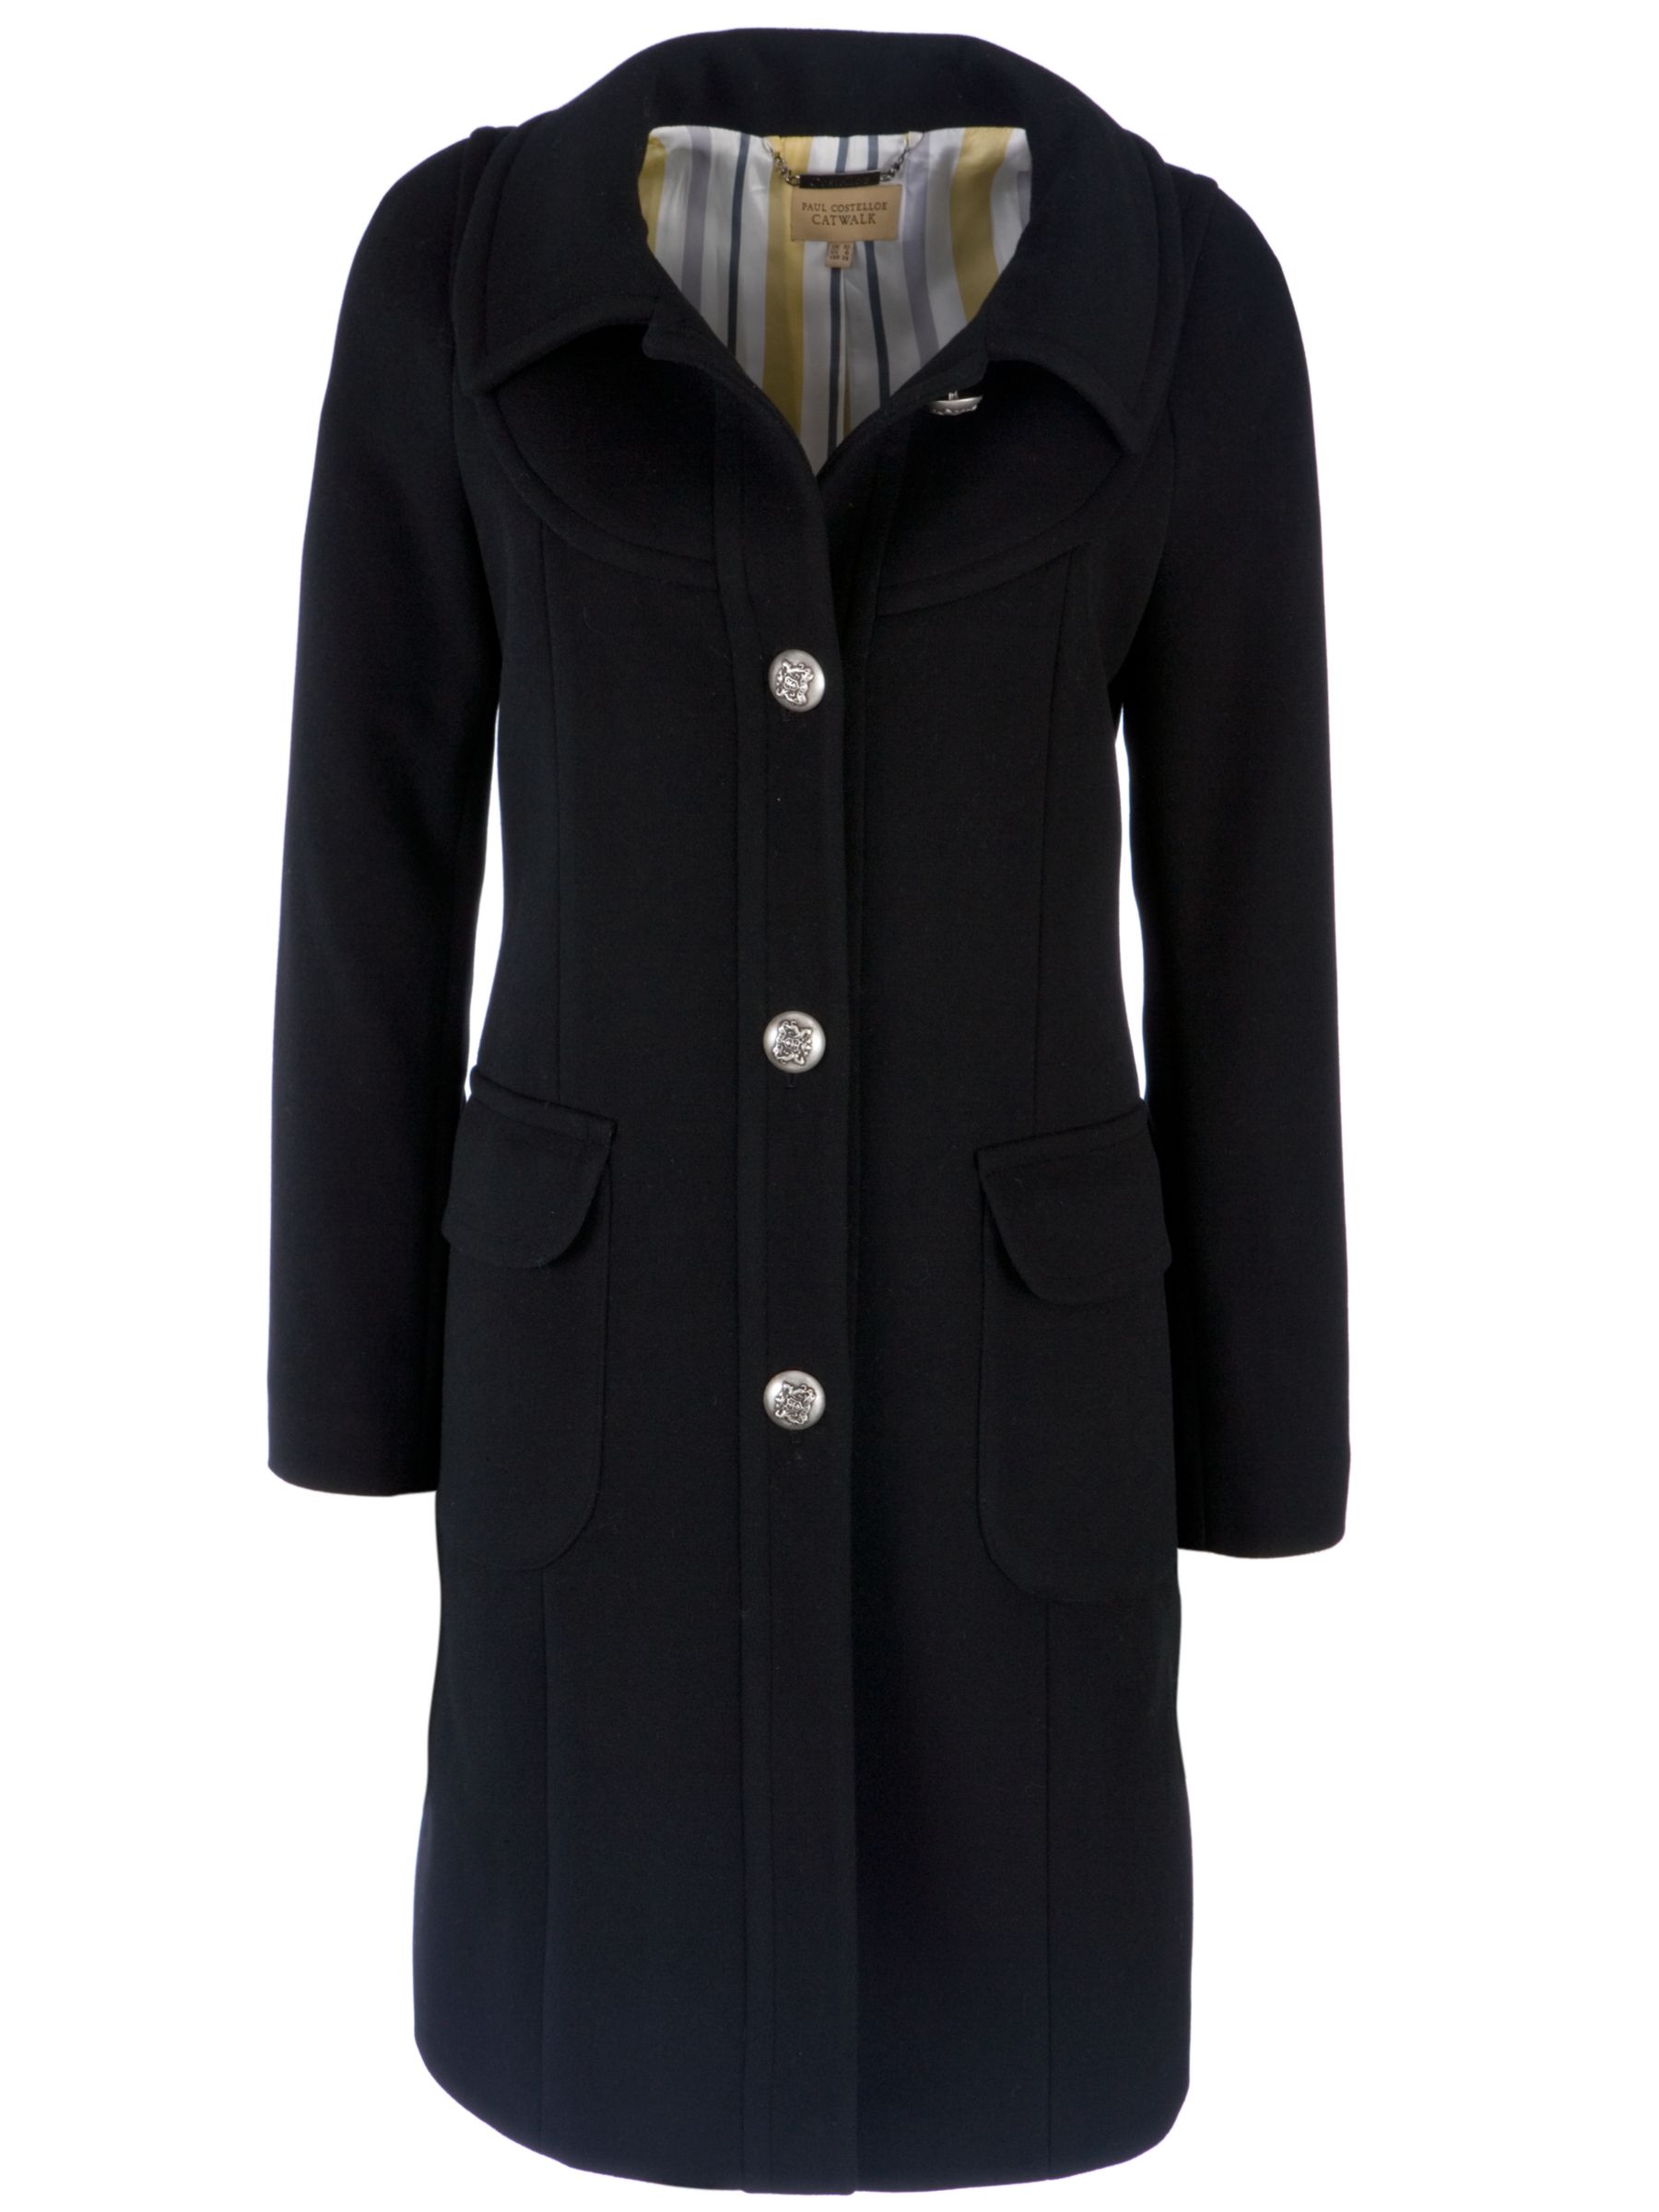 Paul Costelloe Special Edition ¾ Length Wool Coat, Black at John Lewis